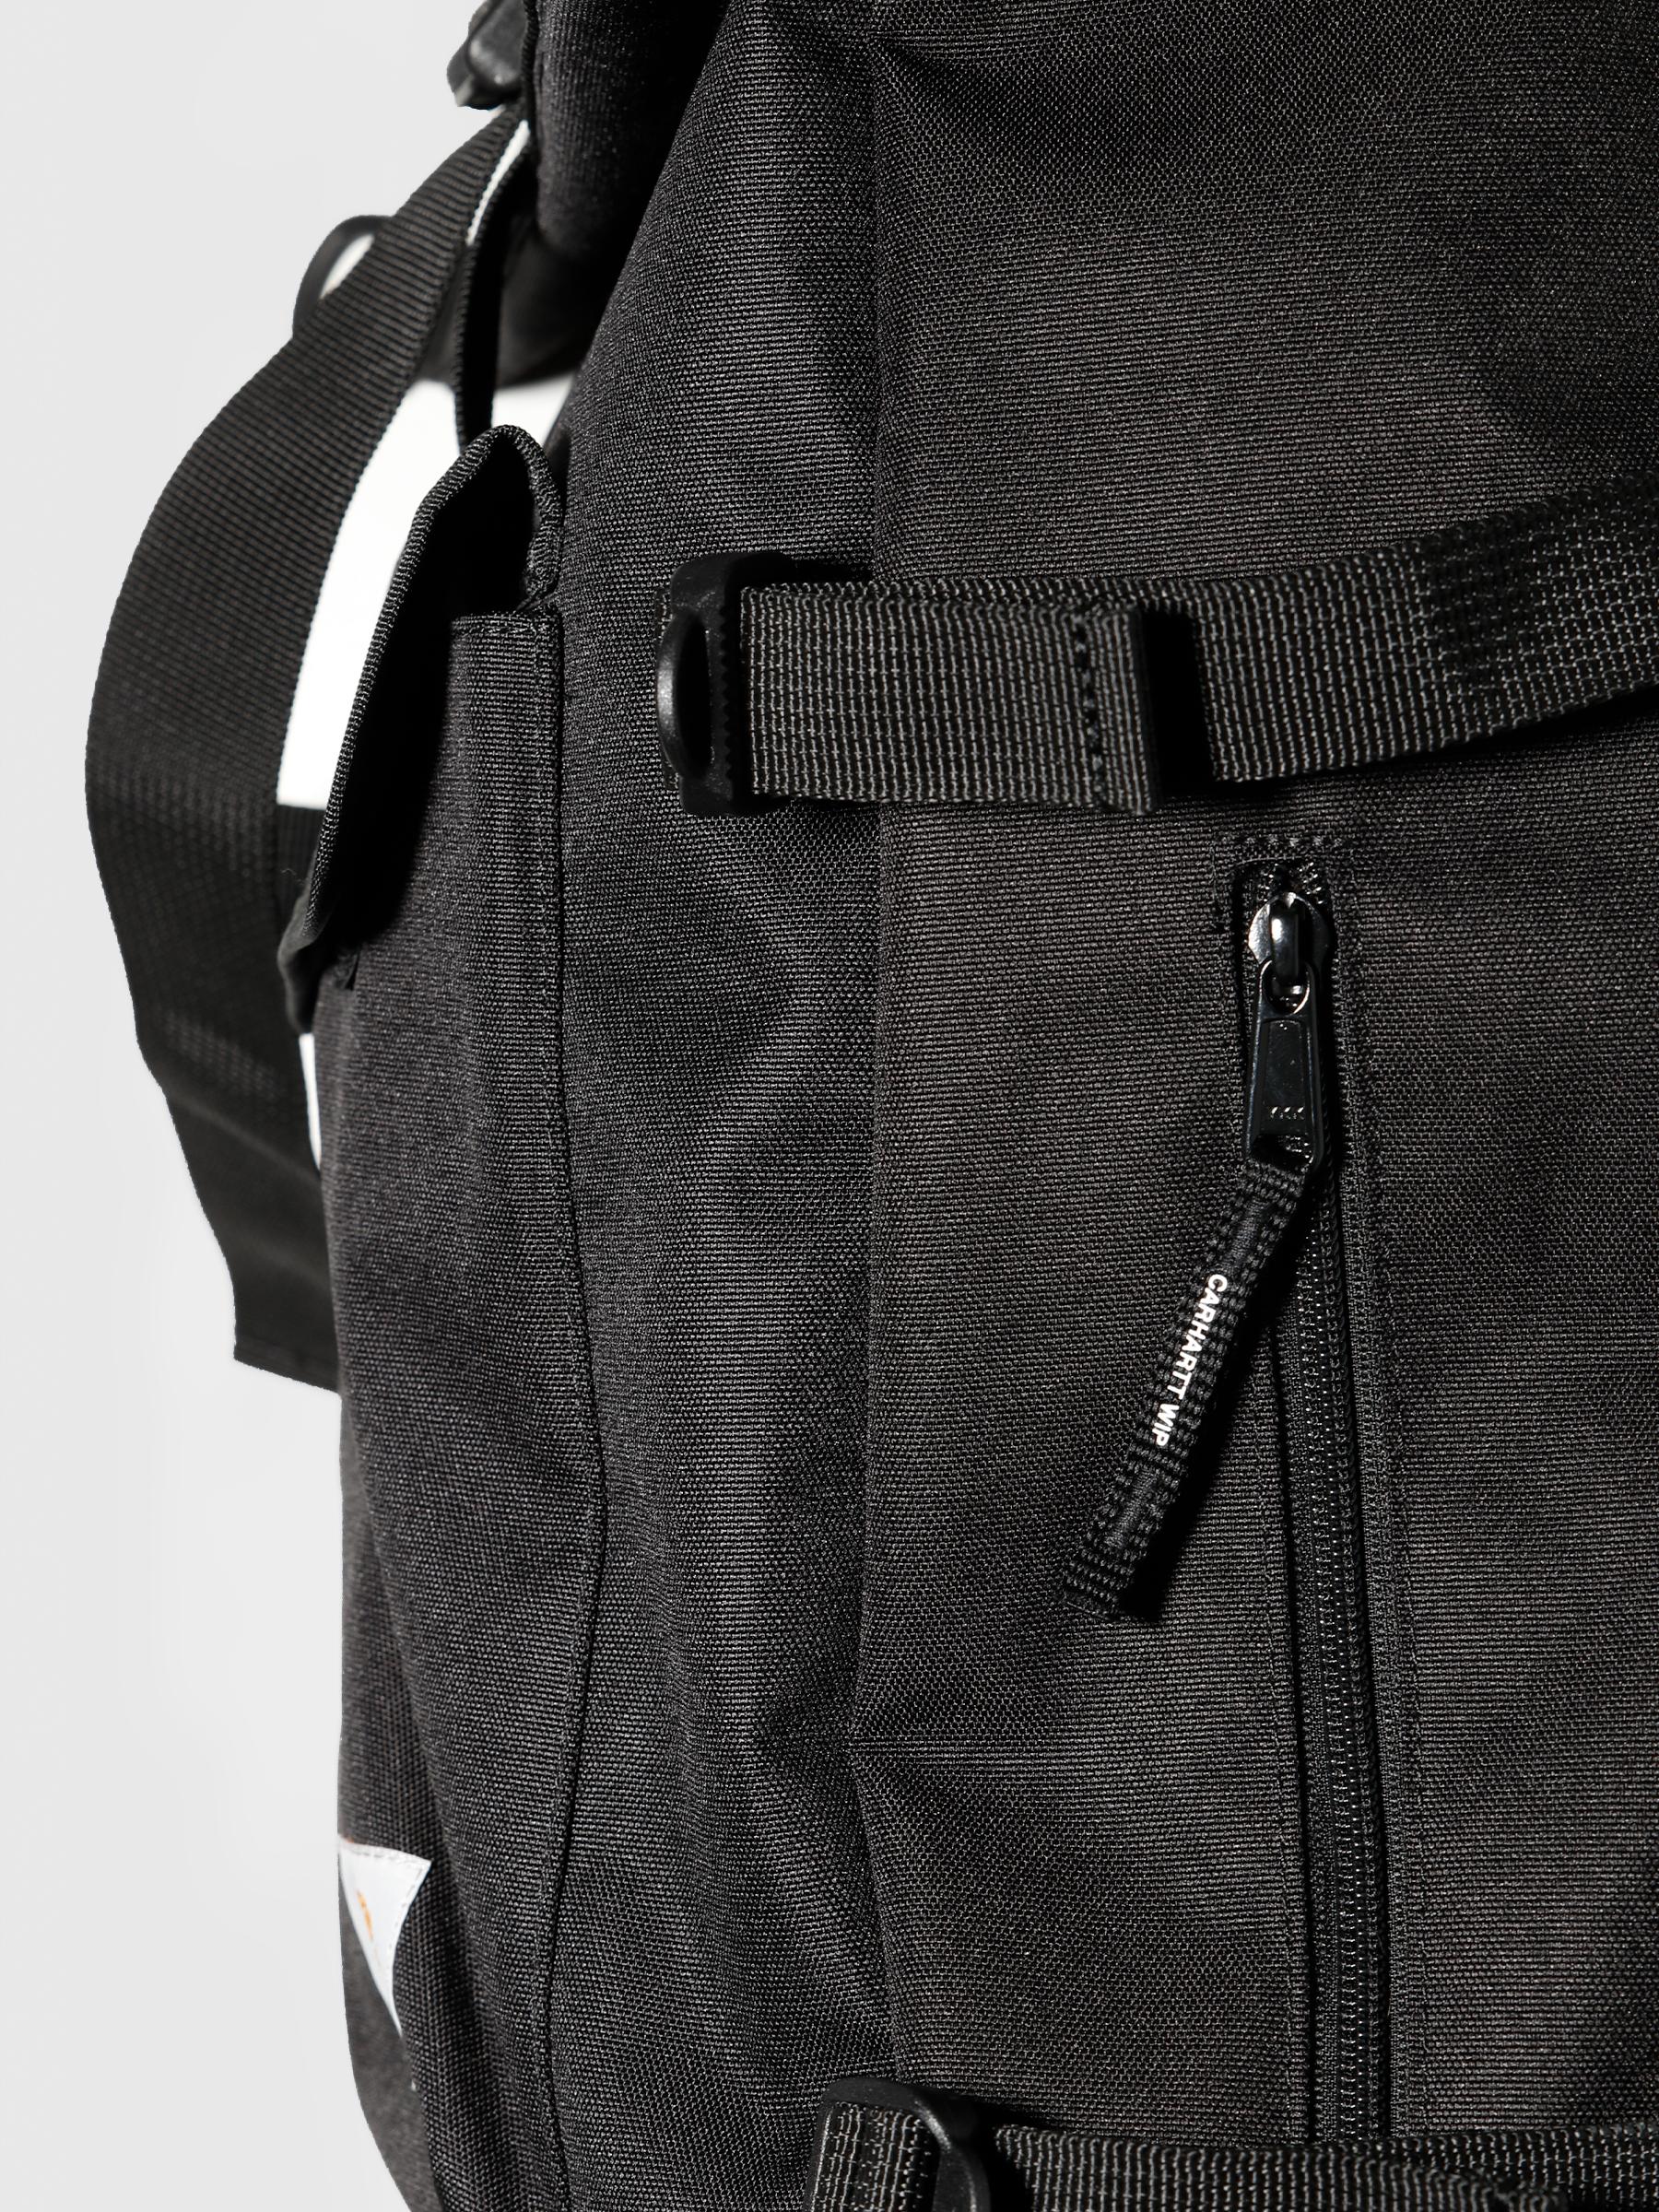 Carhartt WIP Philis Backpack Black - Freshcotton